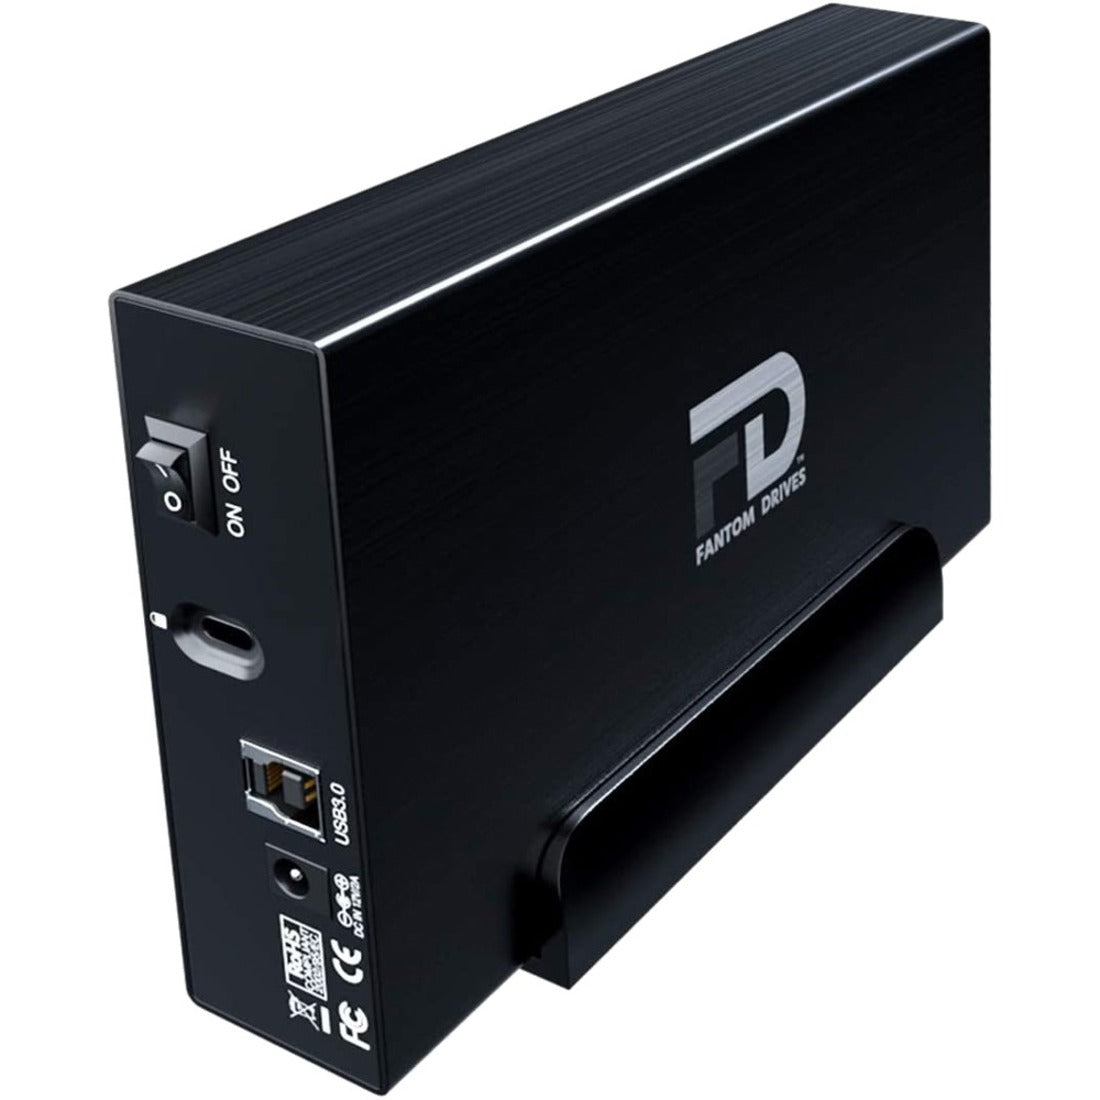 Fantom Drives 10TB External Hard Drive - GFORCE 3 - USB 3 Aluminum Black GF3B10000U